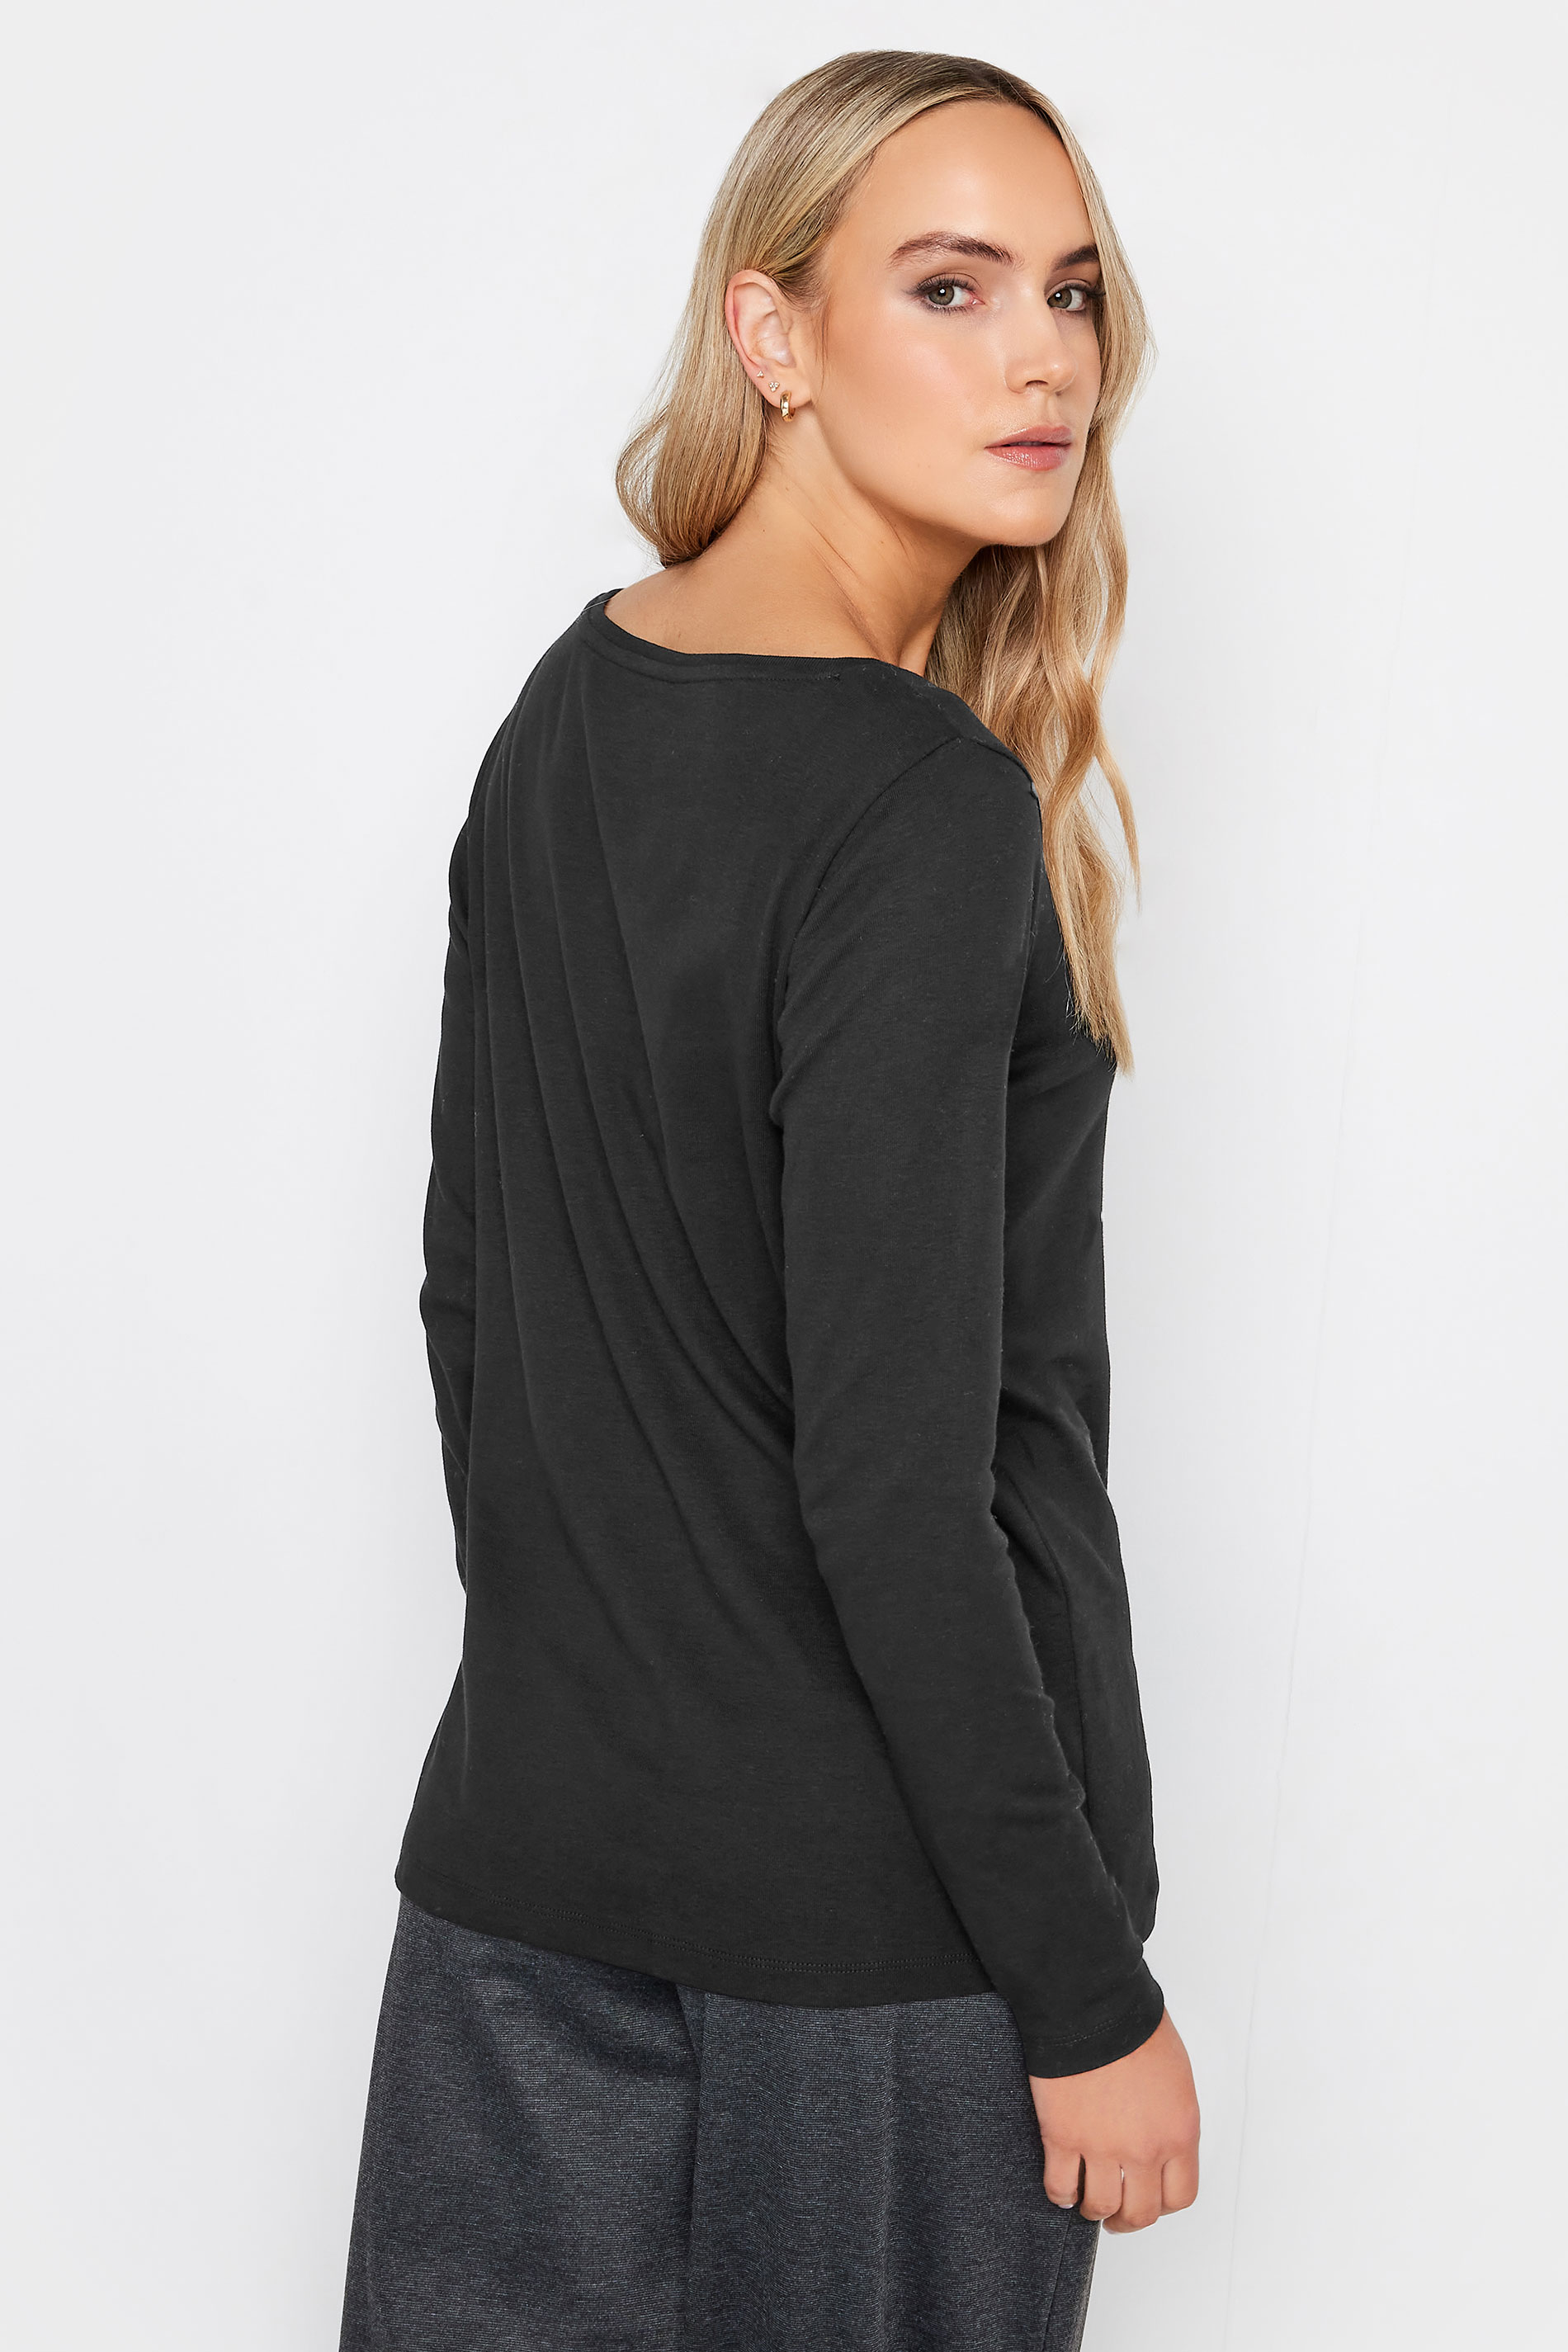 LTS Tall Women's Black Crew Neck Long Sleeve Cotton T-Shirt | Long Tall Sally 3